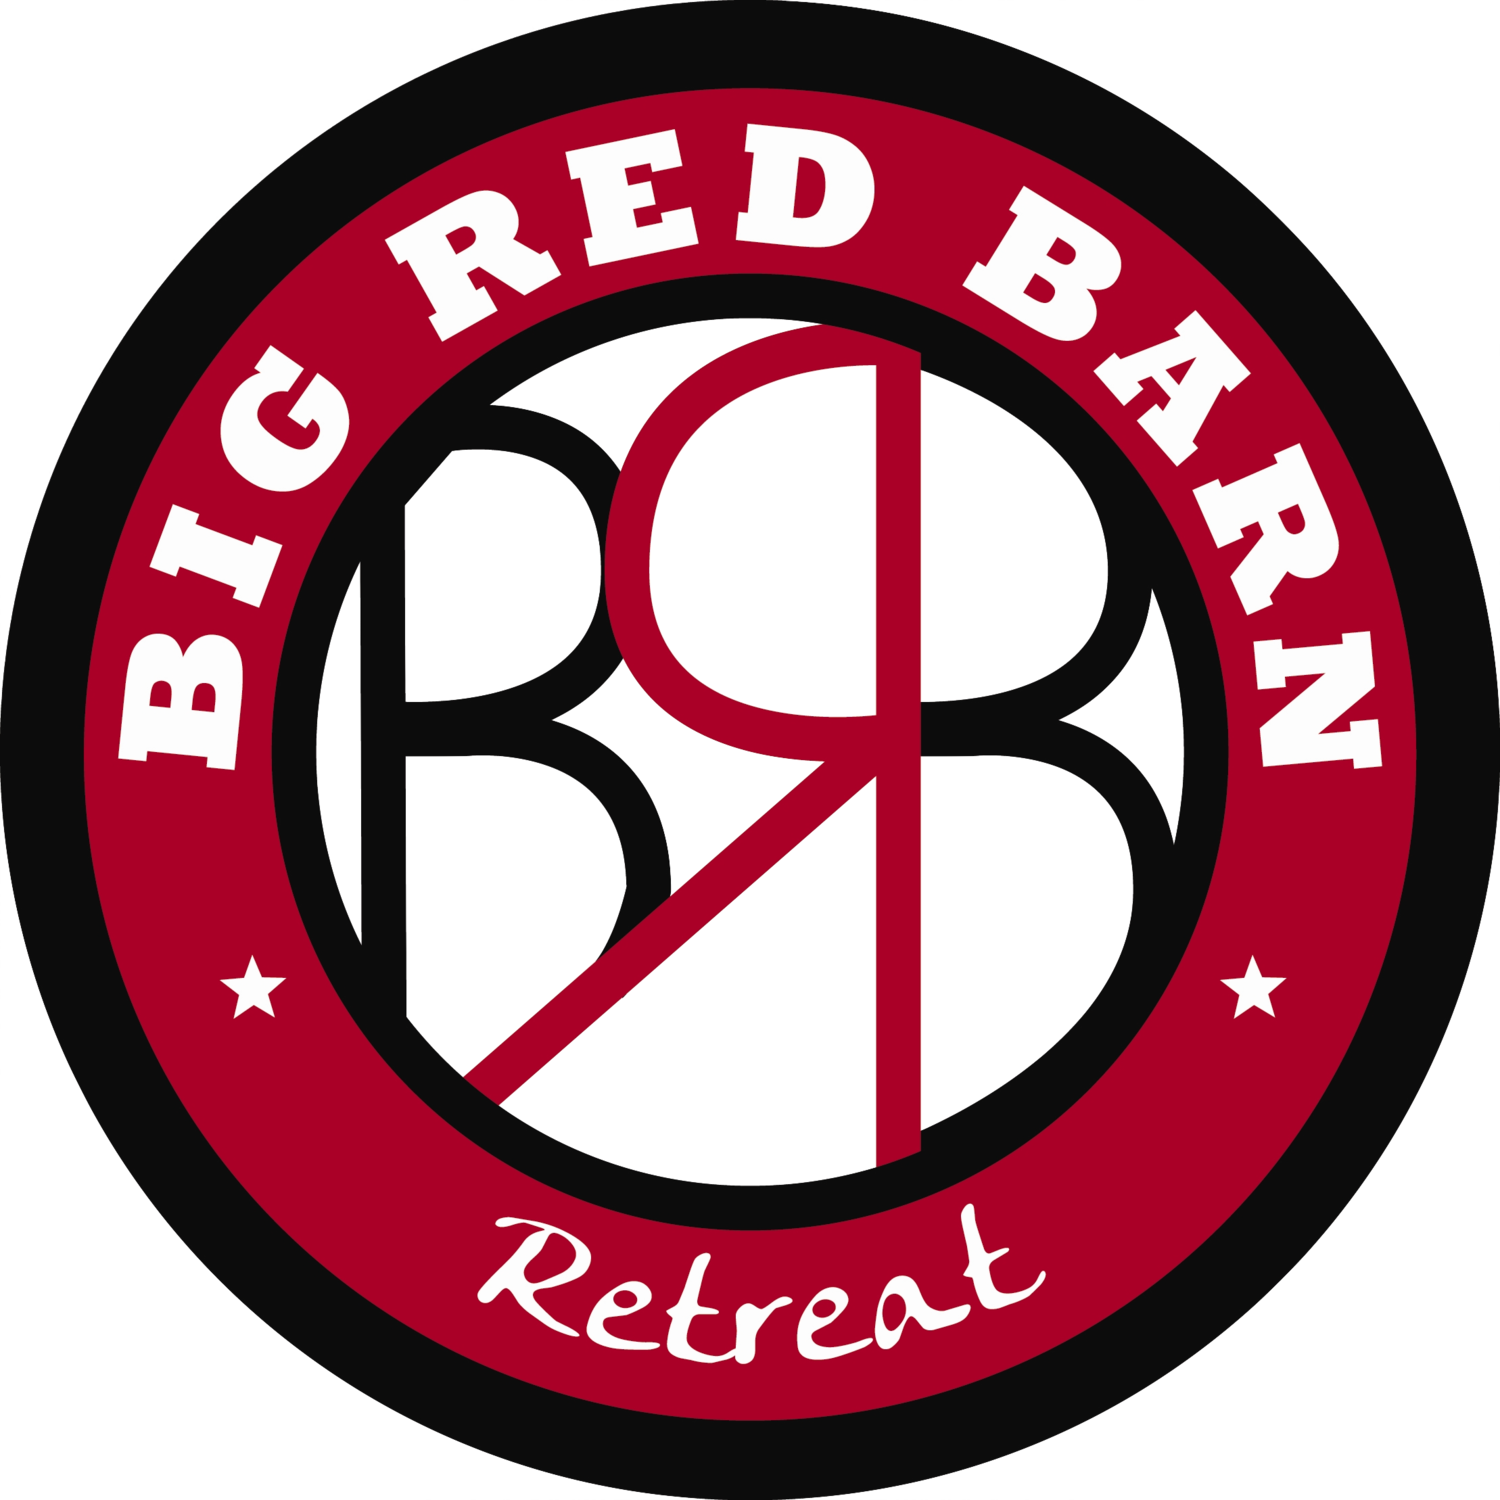 Big Red Barn Retreat